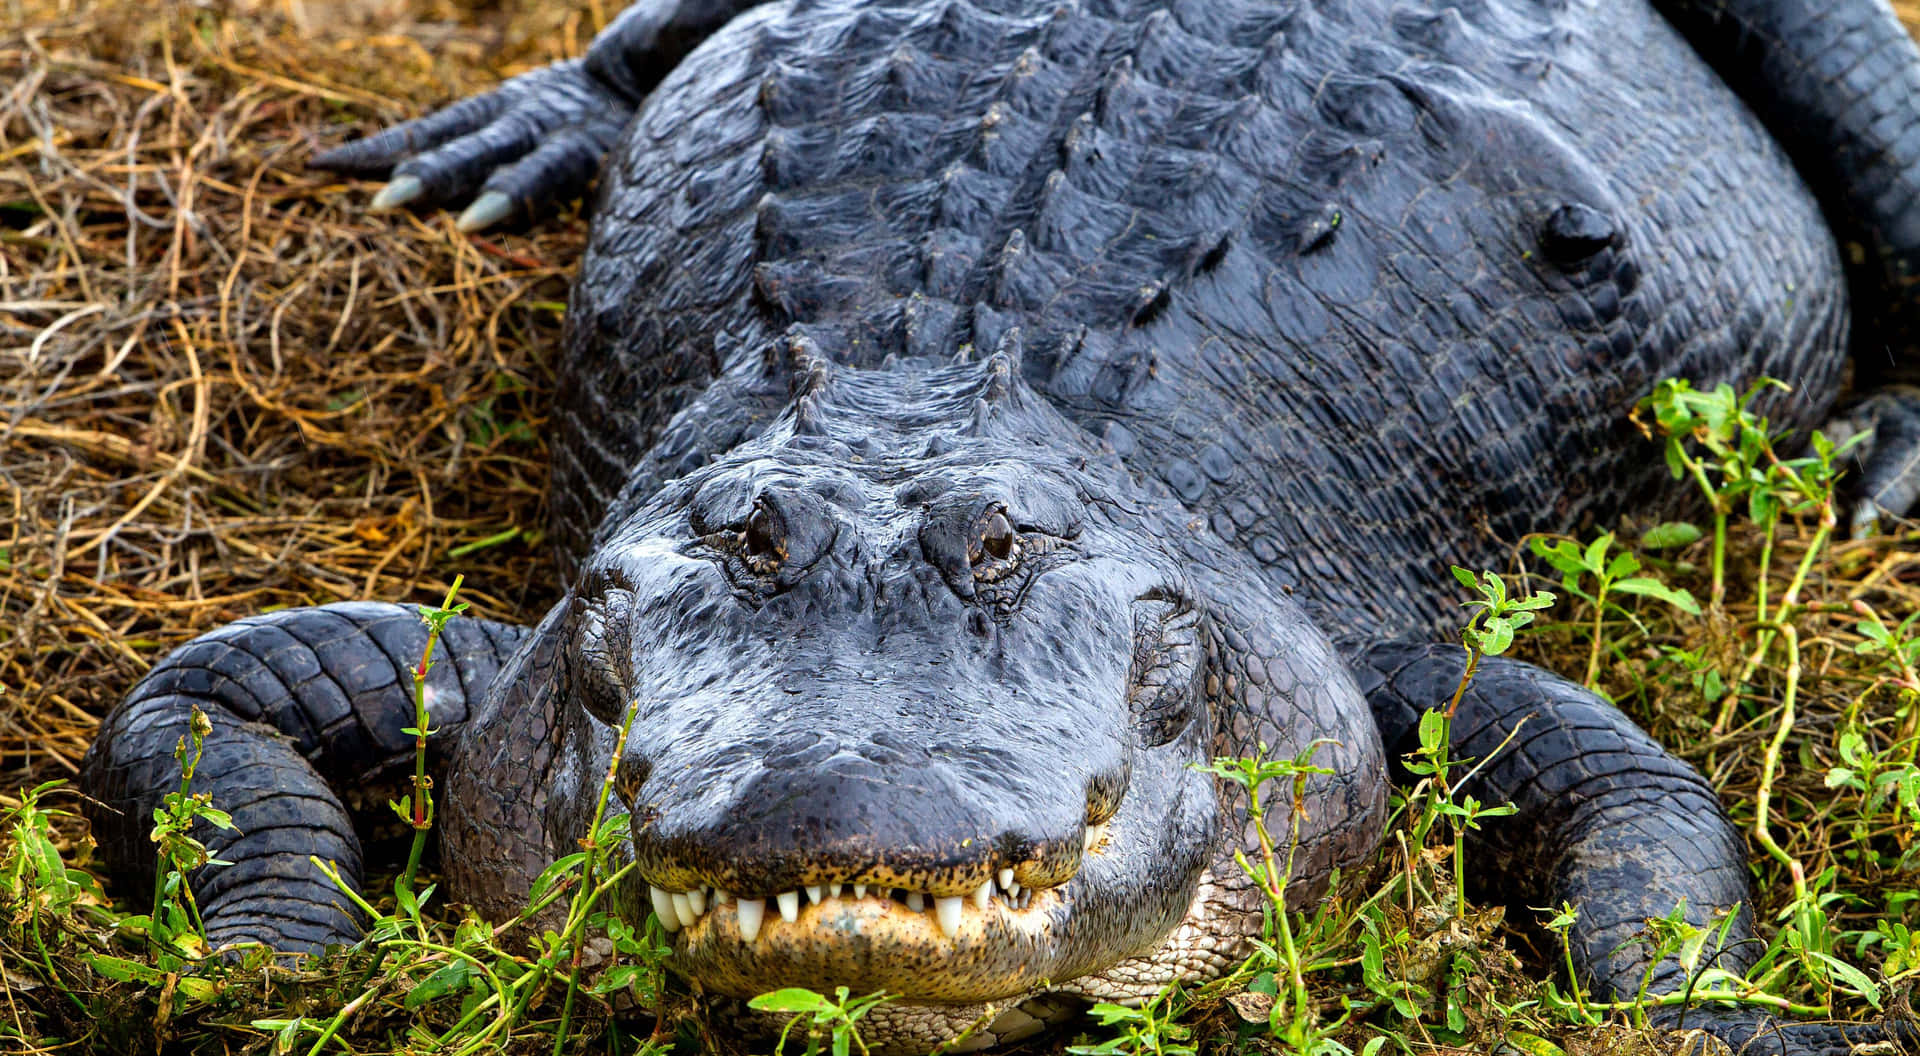 A Close-up Look at a Majestic Alligator